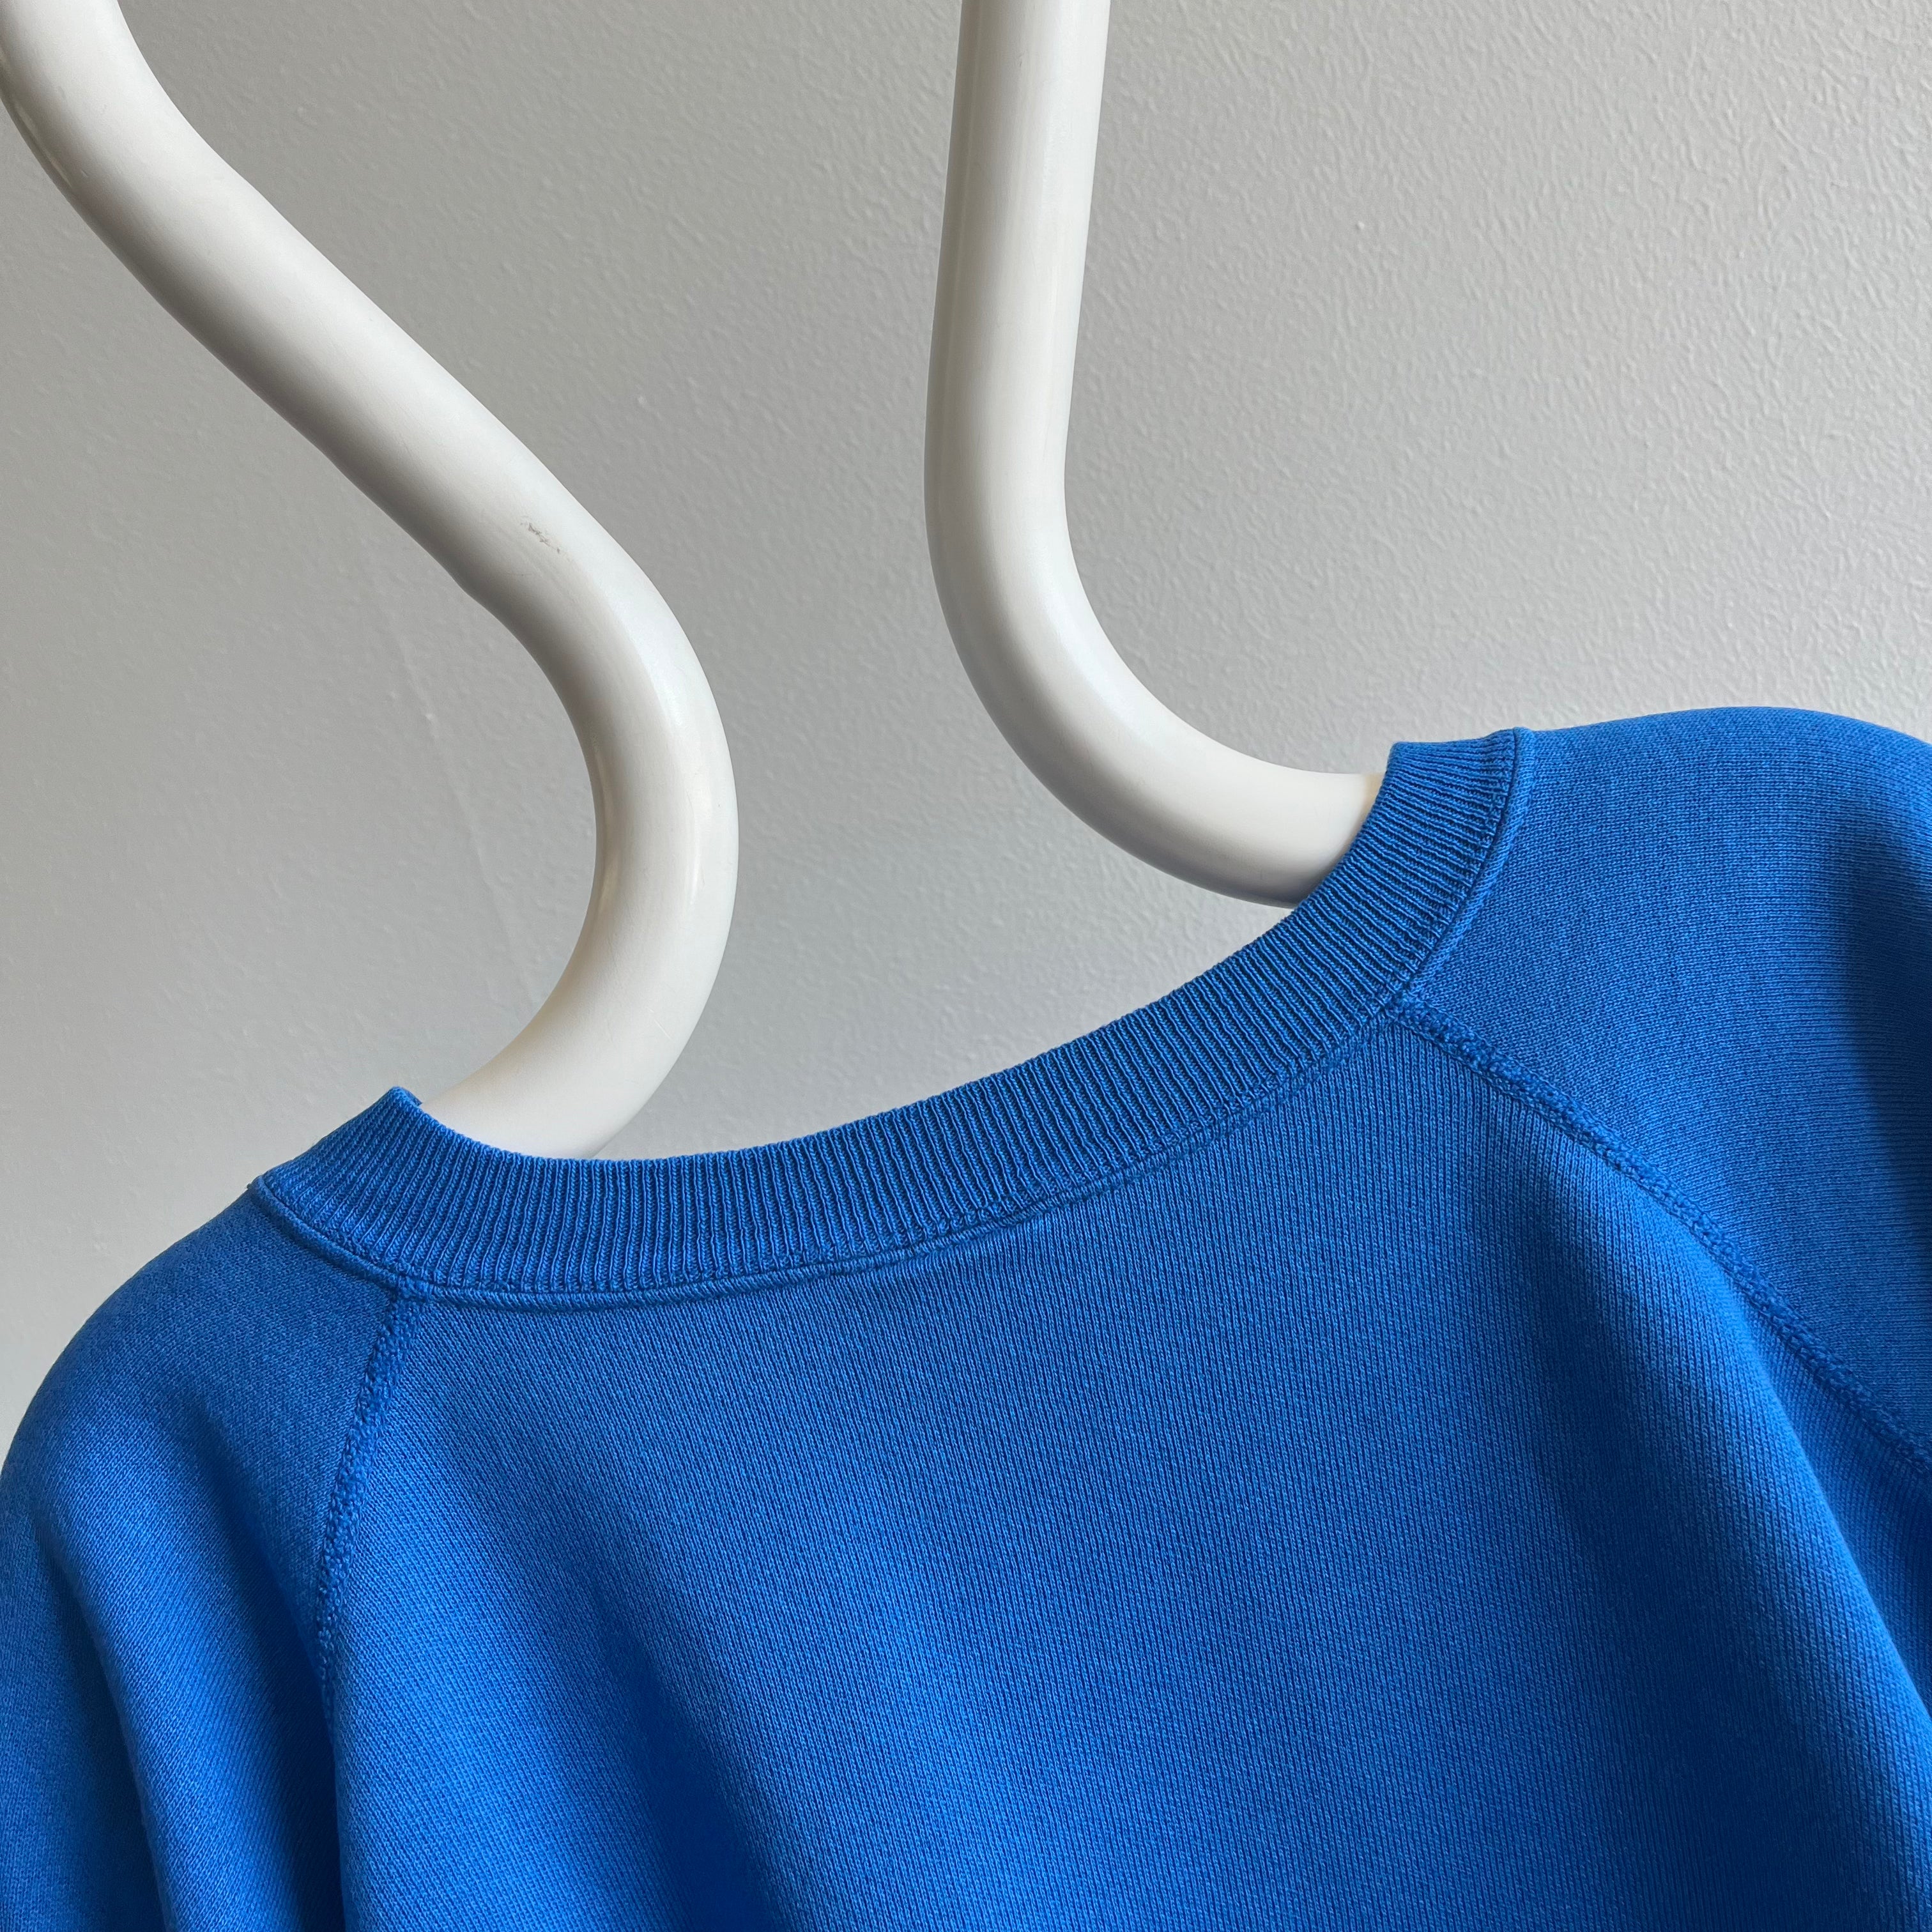 1980s Blank Blue Bleach Stained Sweatshirt by Hanes